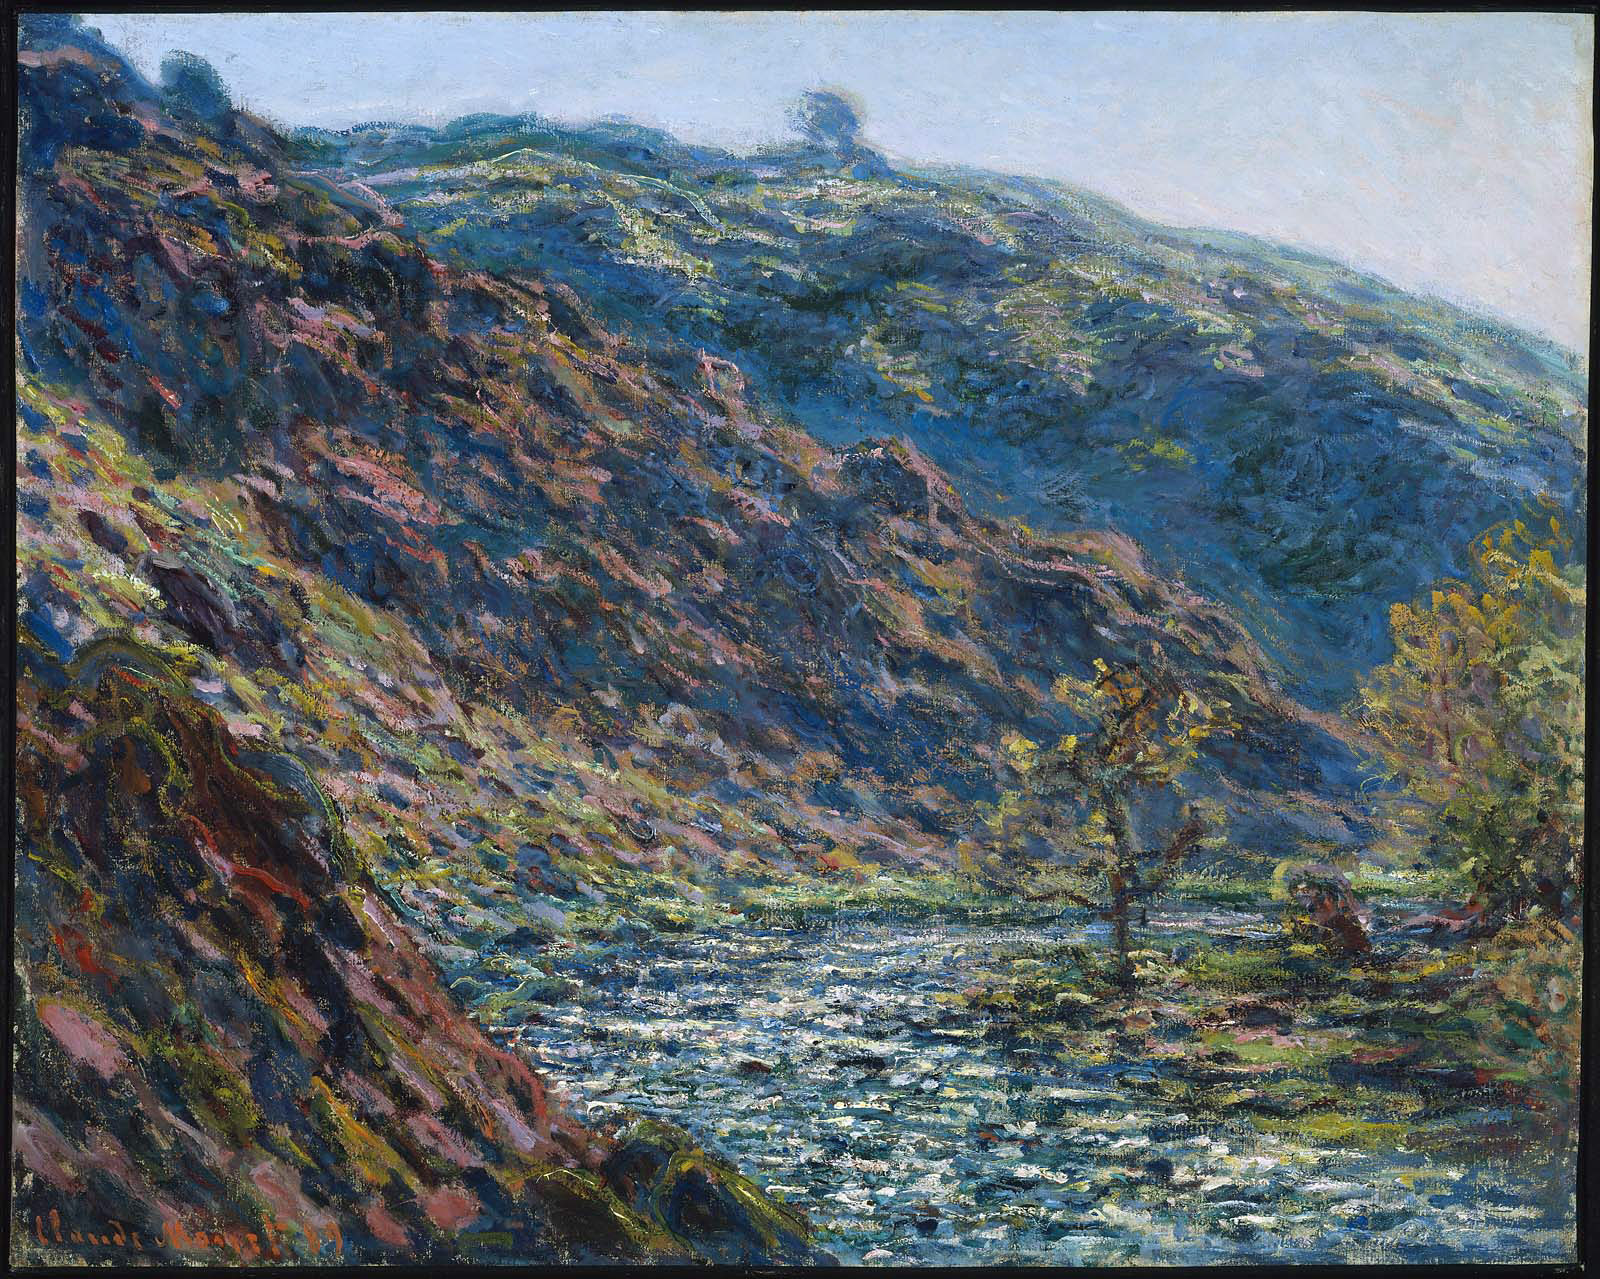 Claude+Monet-1840-1926 (944).jpg